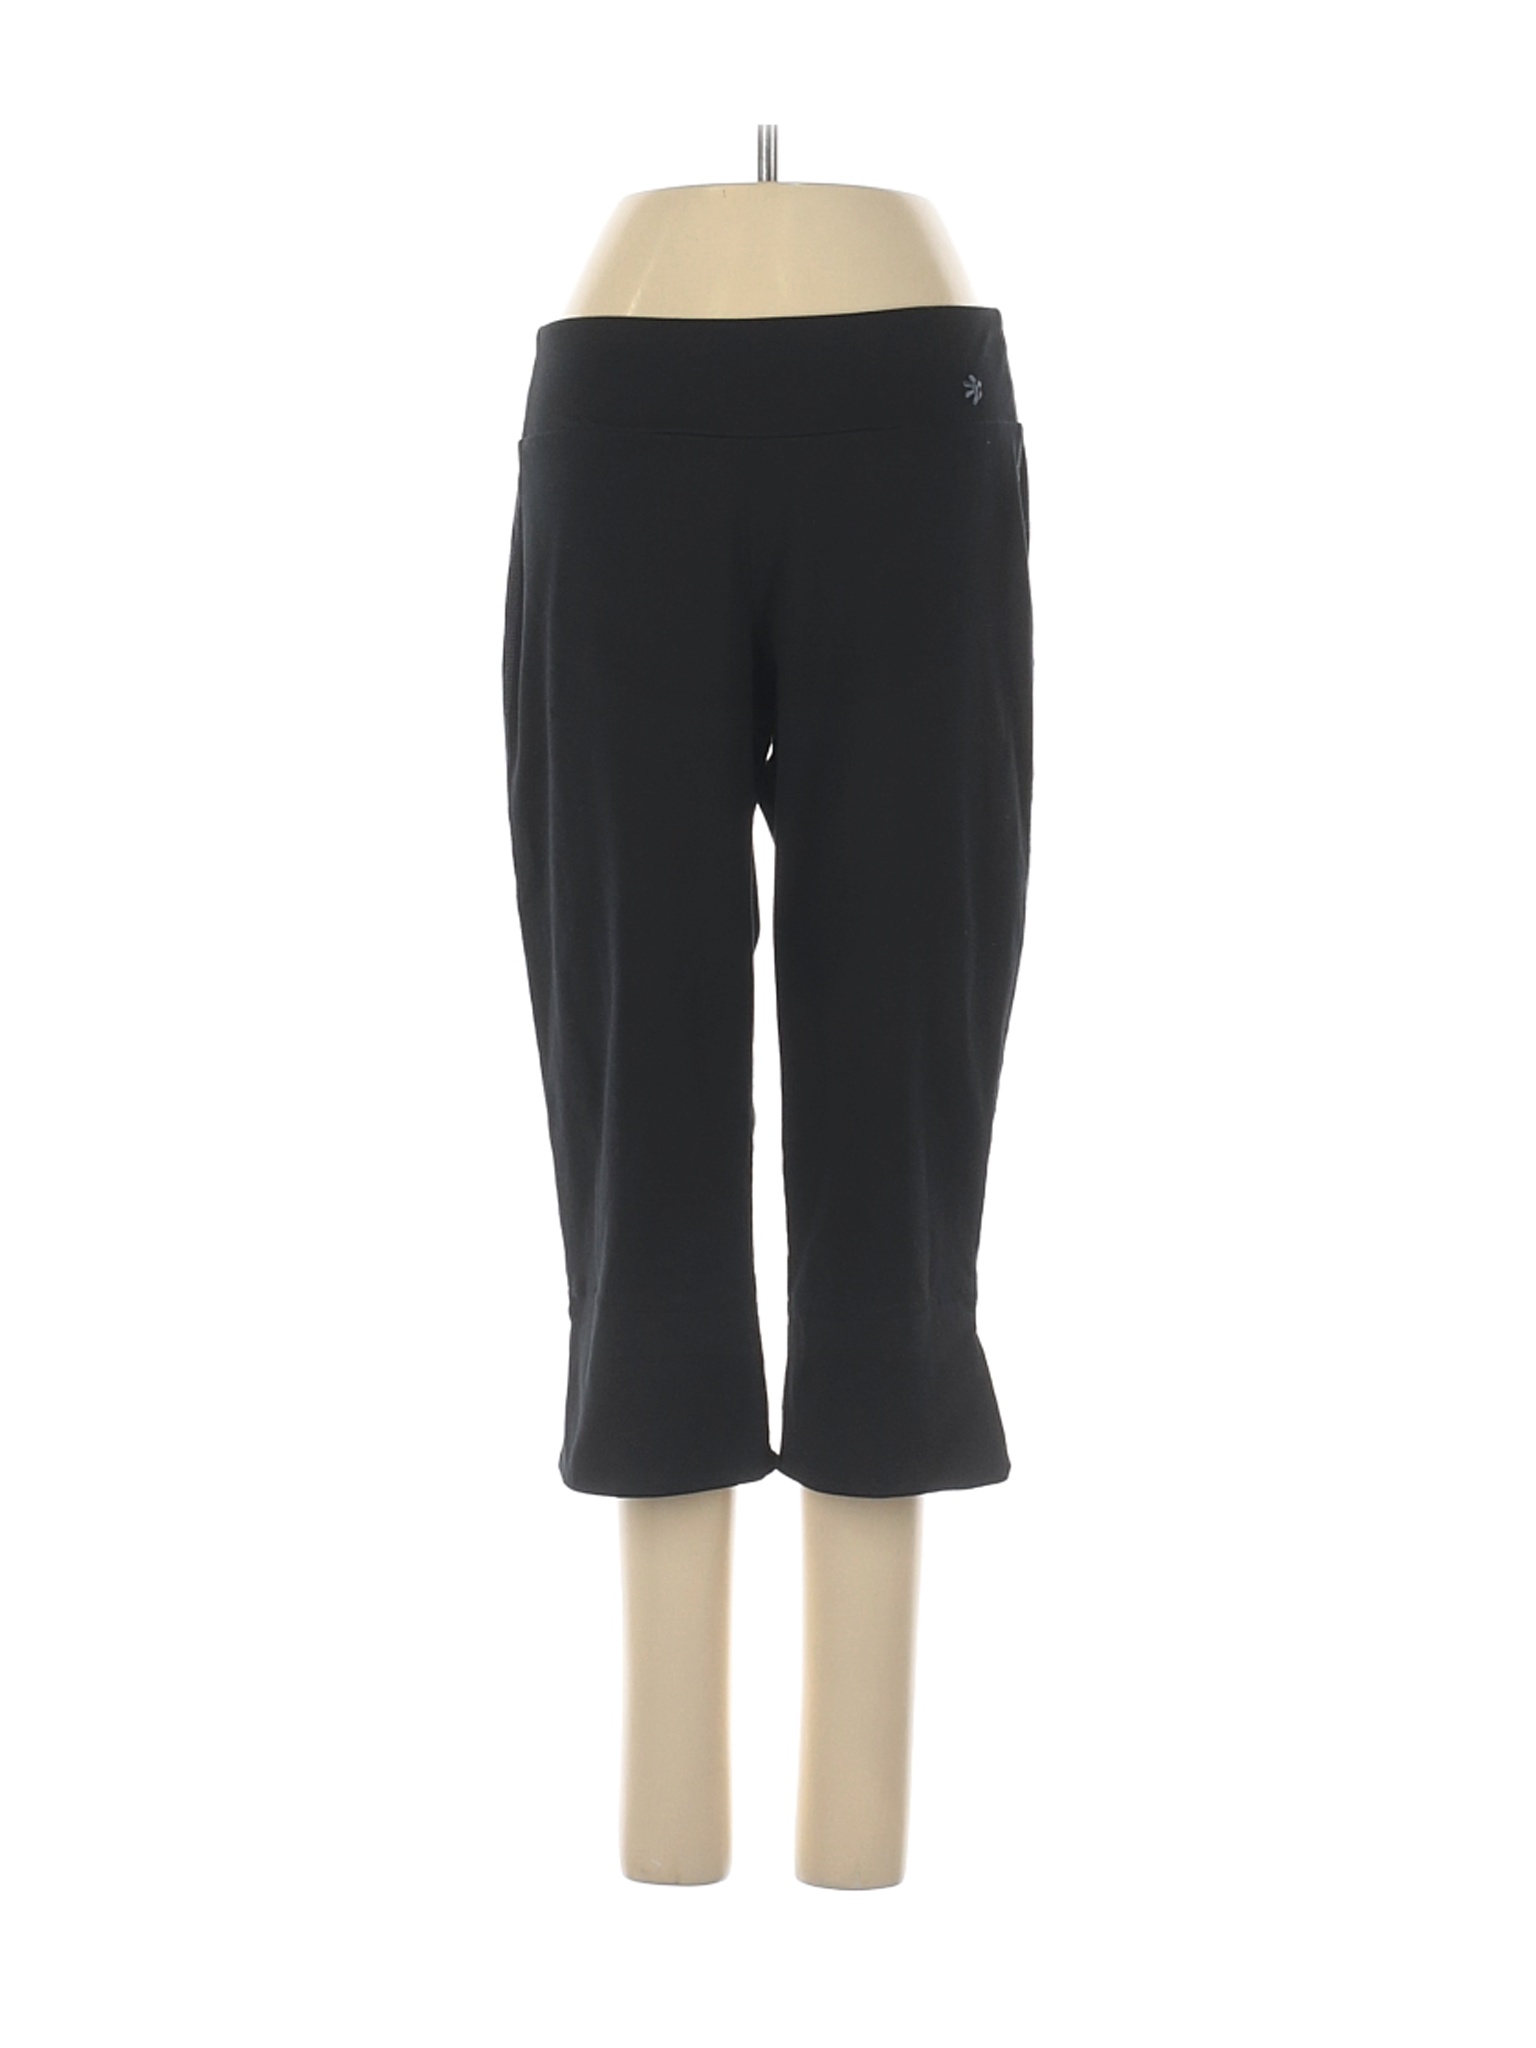 Old Navy Women Black Yoga Pants S | eBay